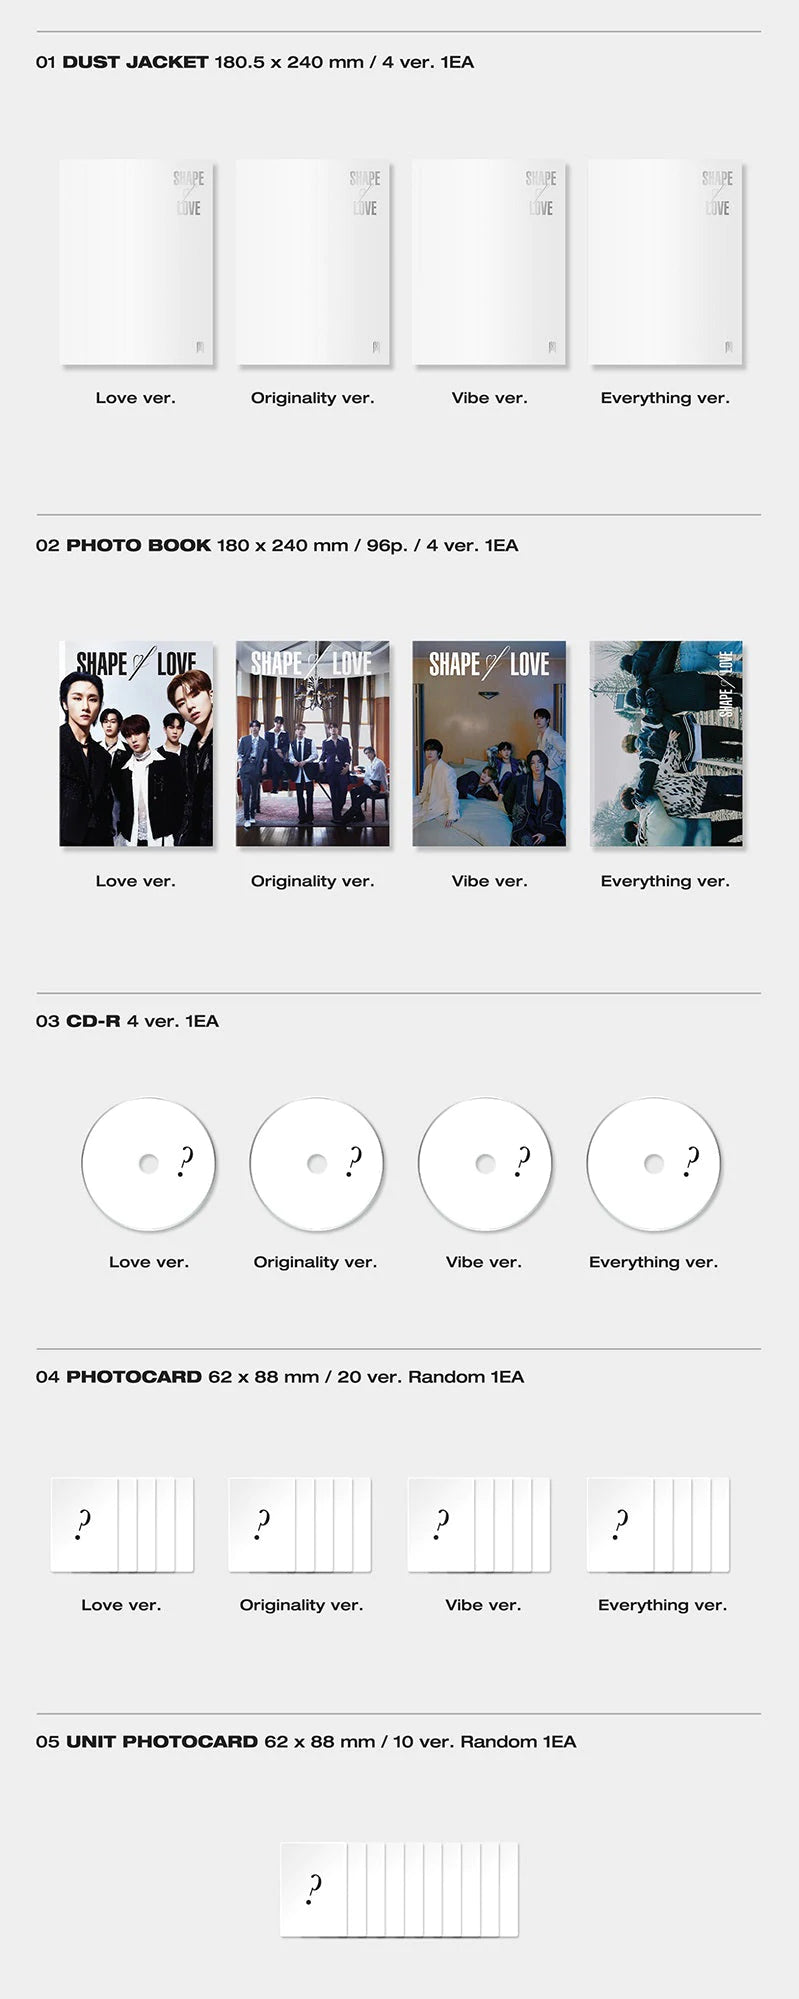 MONSTA X - MONSTA X - 11th Mini Album [SHAPE of LOVE] (Vibe ver) Dust  Jacket + Photo Book + CD-R + Photocard + Unit Photocard -  Music